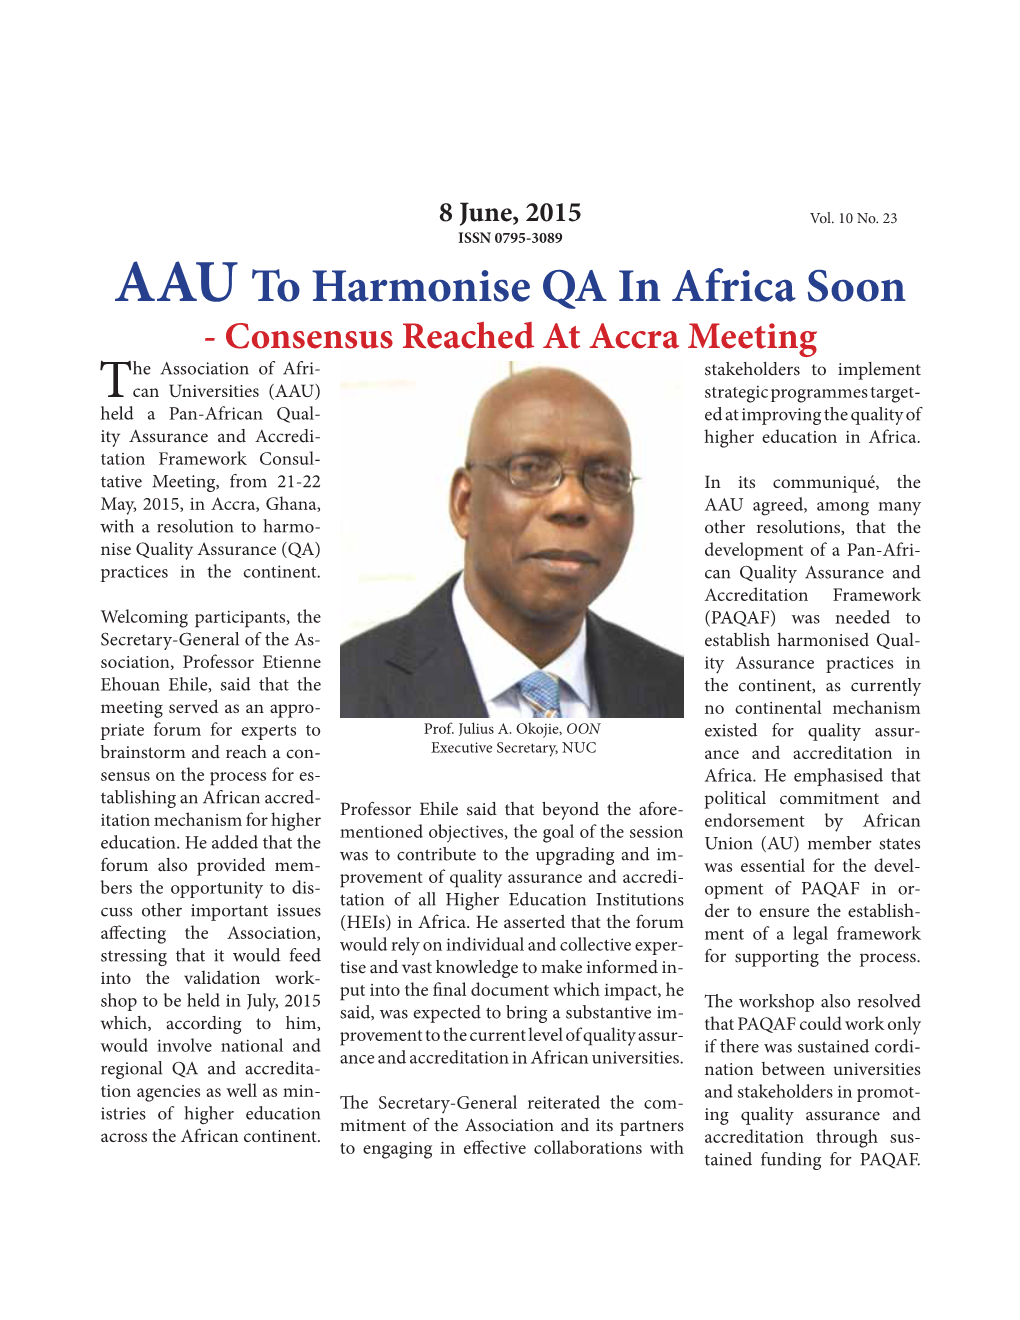 AAU to Harmonise QA in Africa Soon